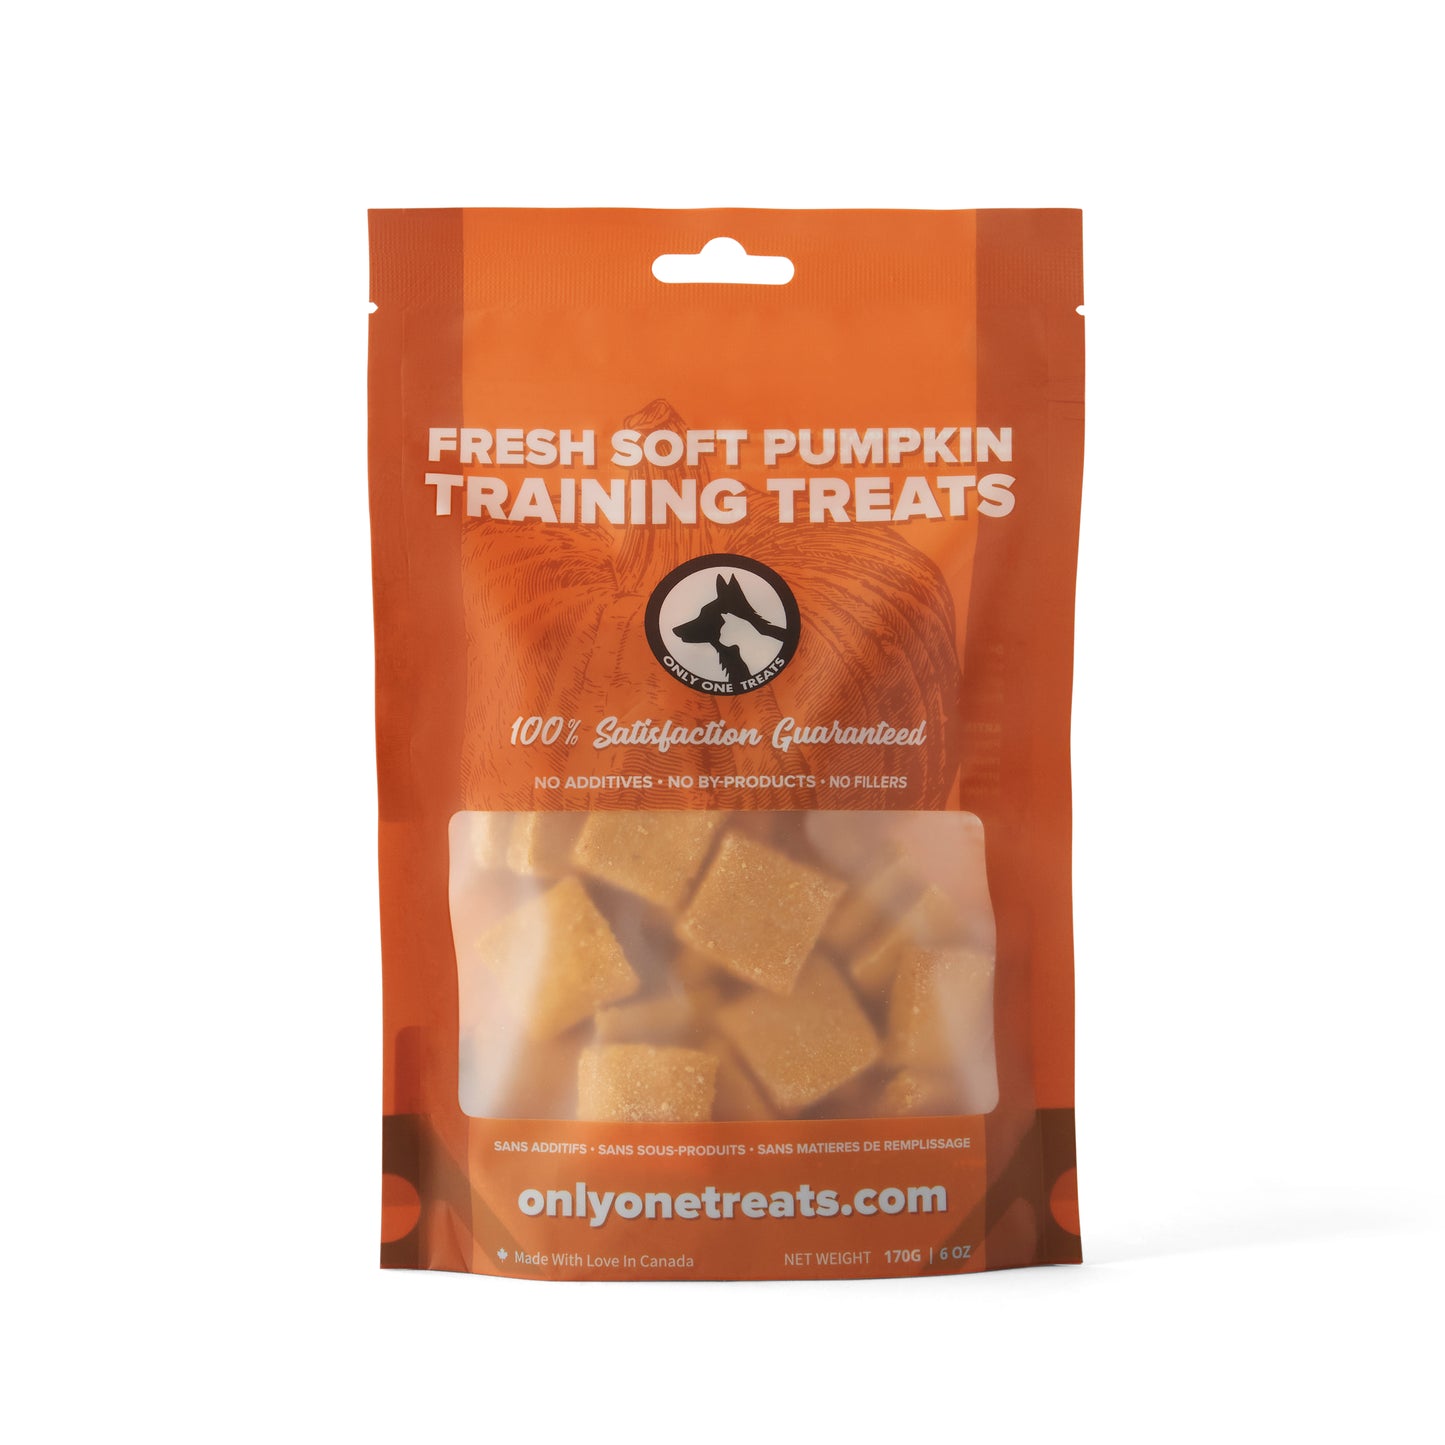 Pumpkin Training Treats